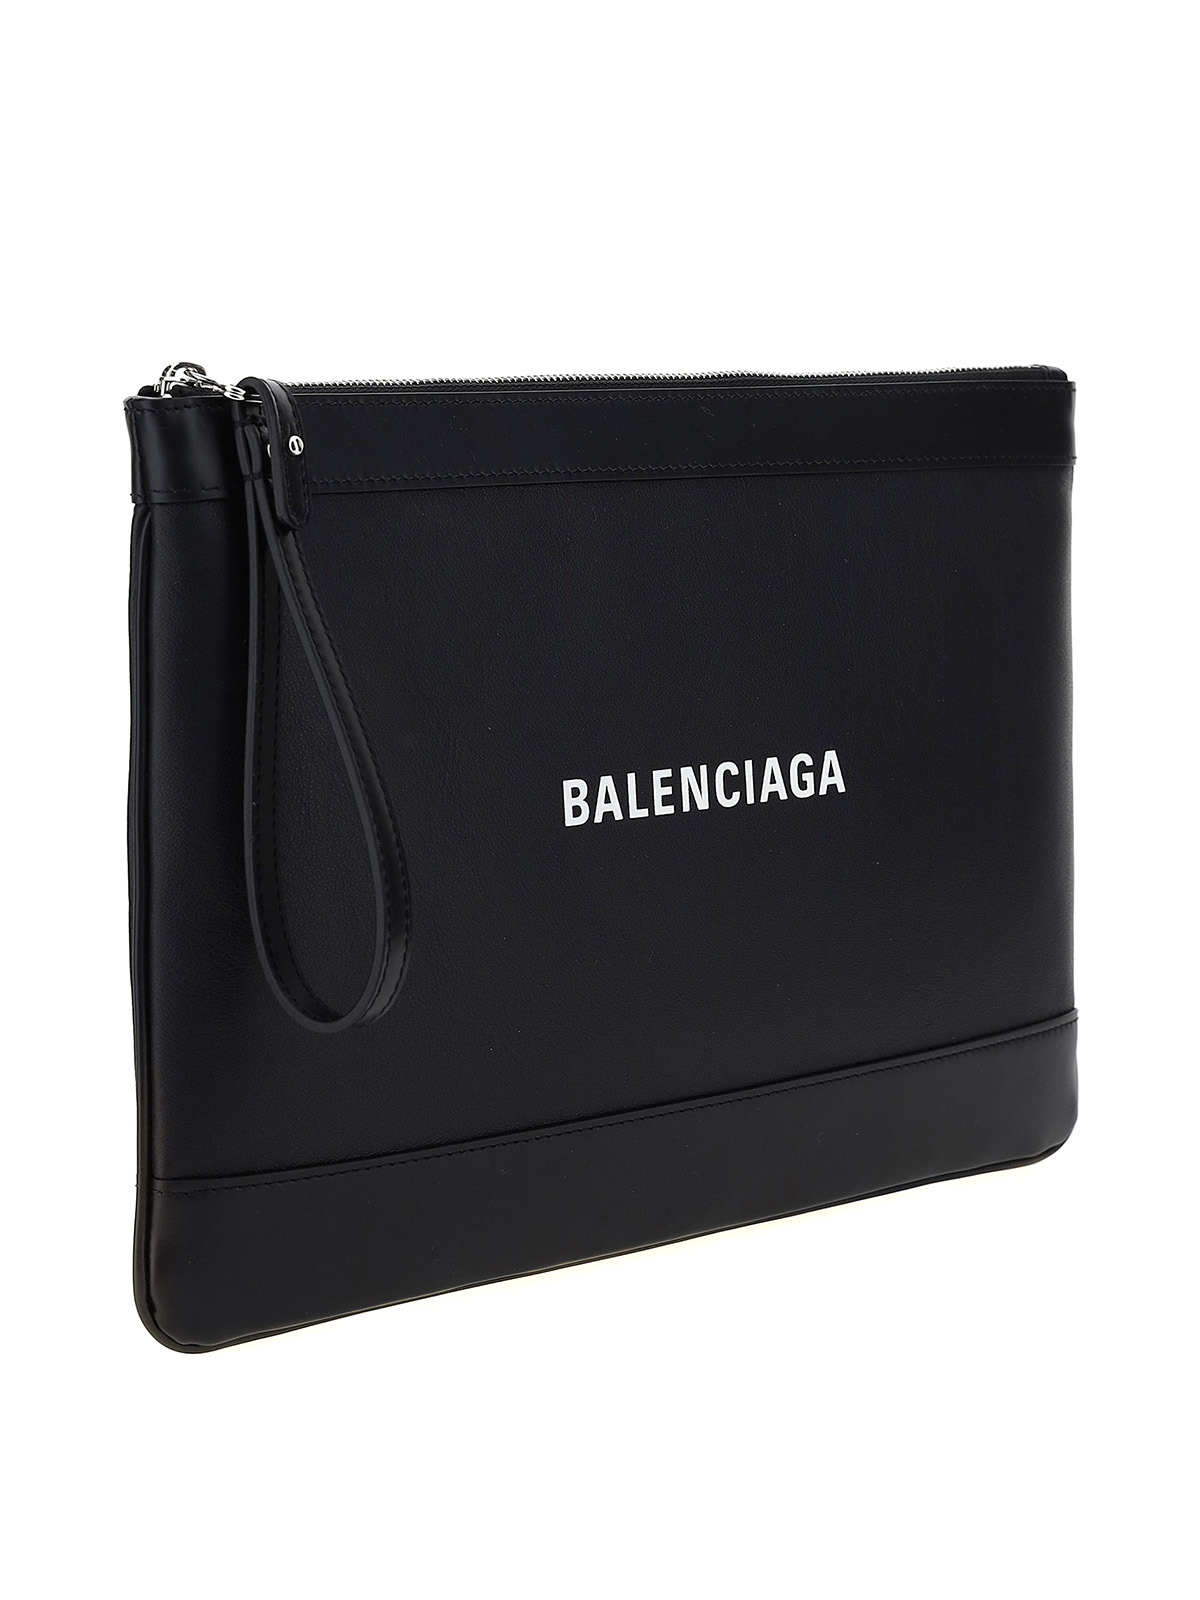 Clutches Balenciaga - Leather clutch bag - 63874418D1N1000 iKRIX.com